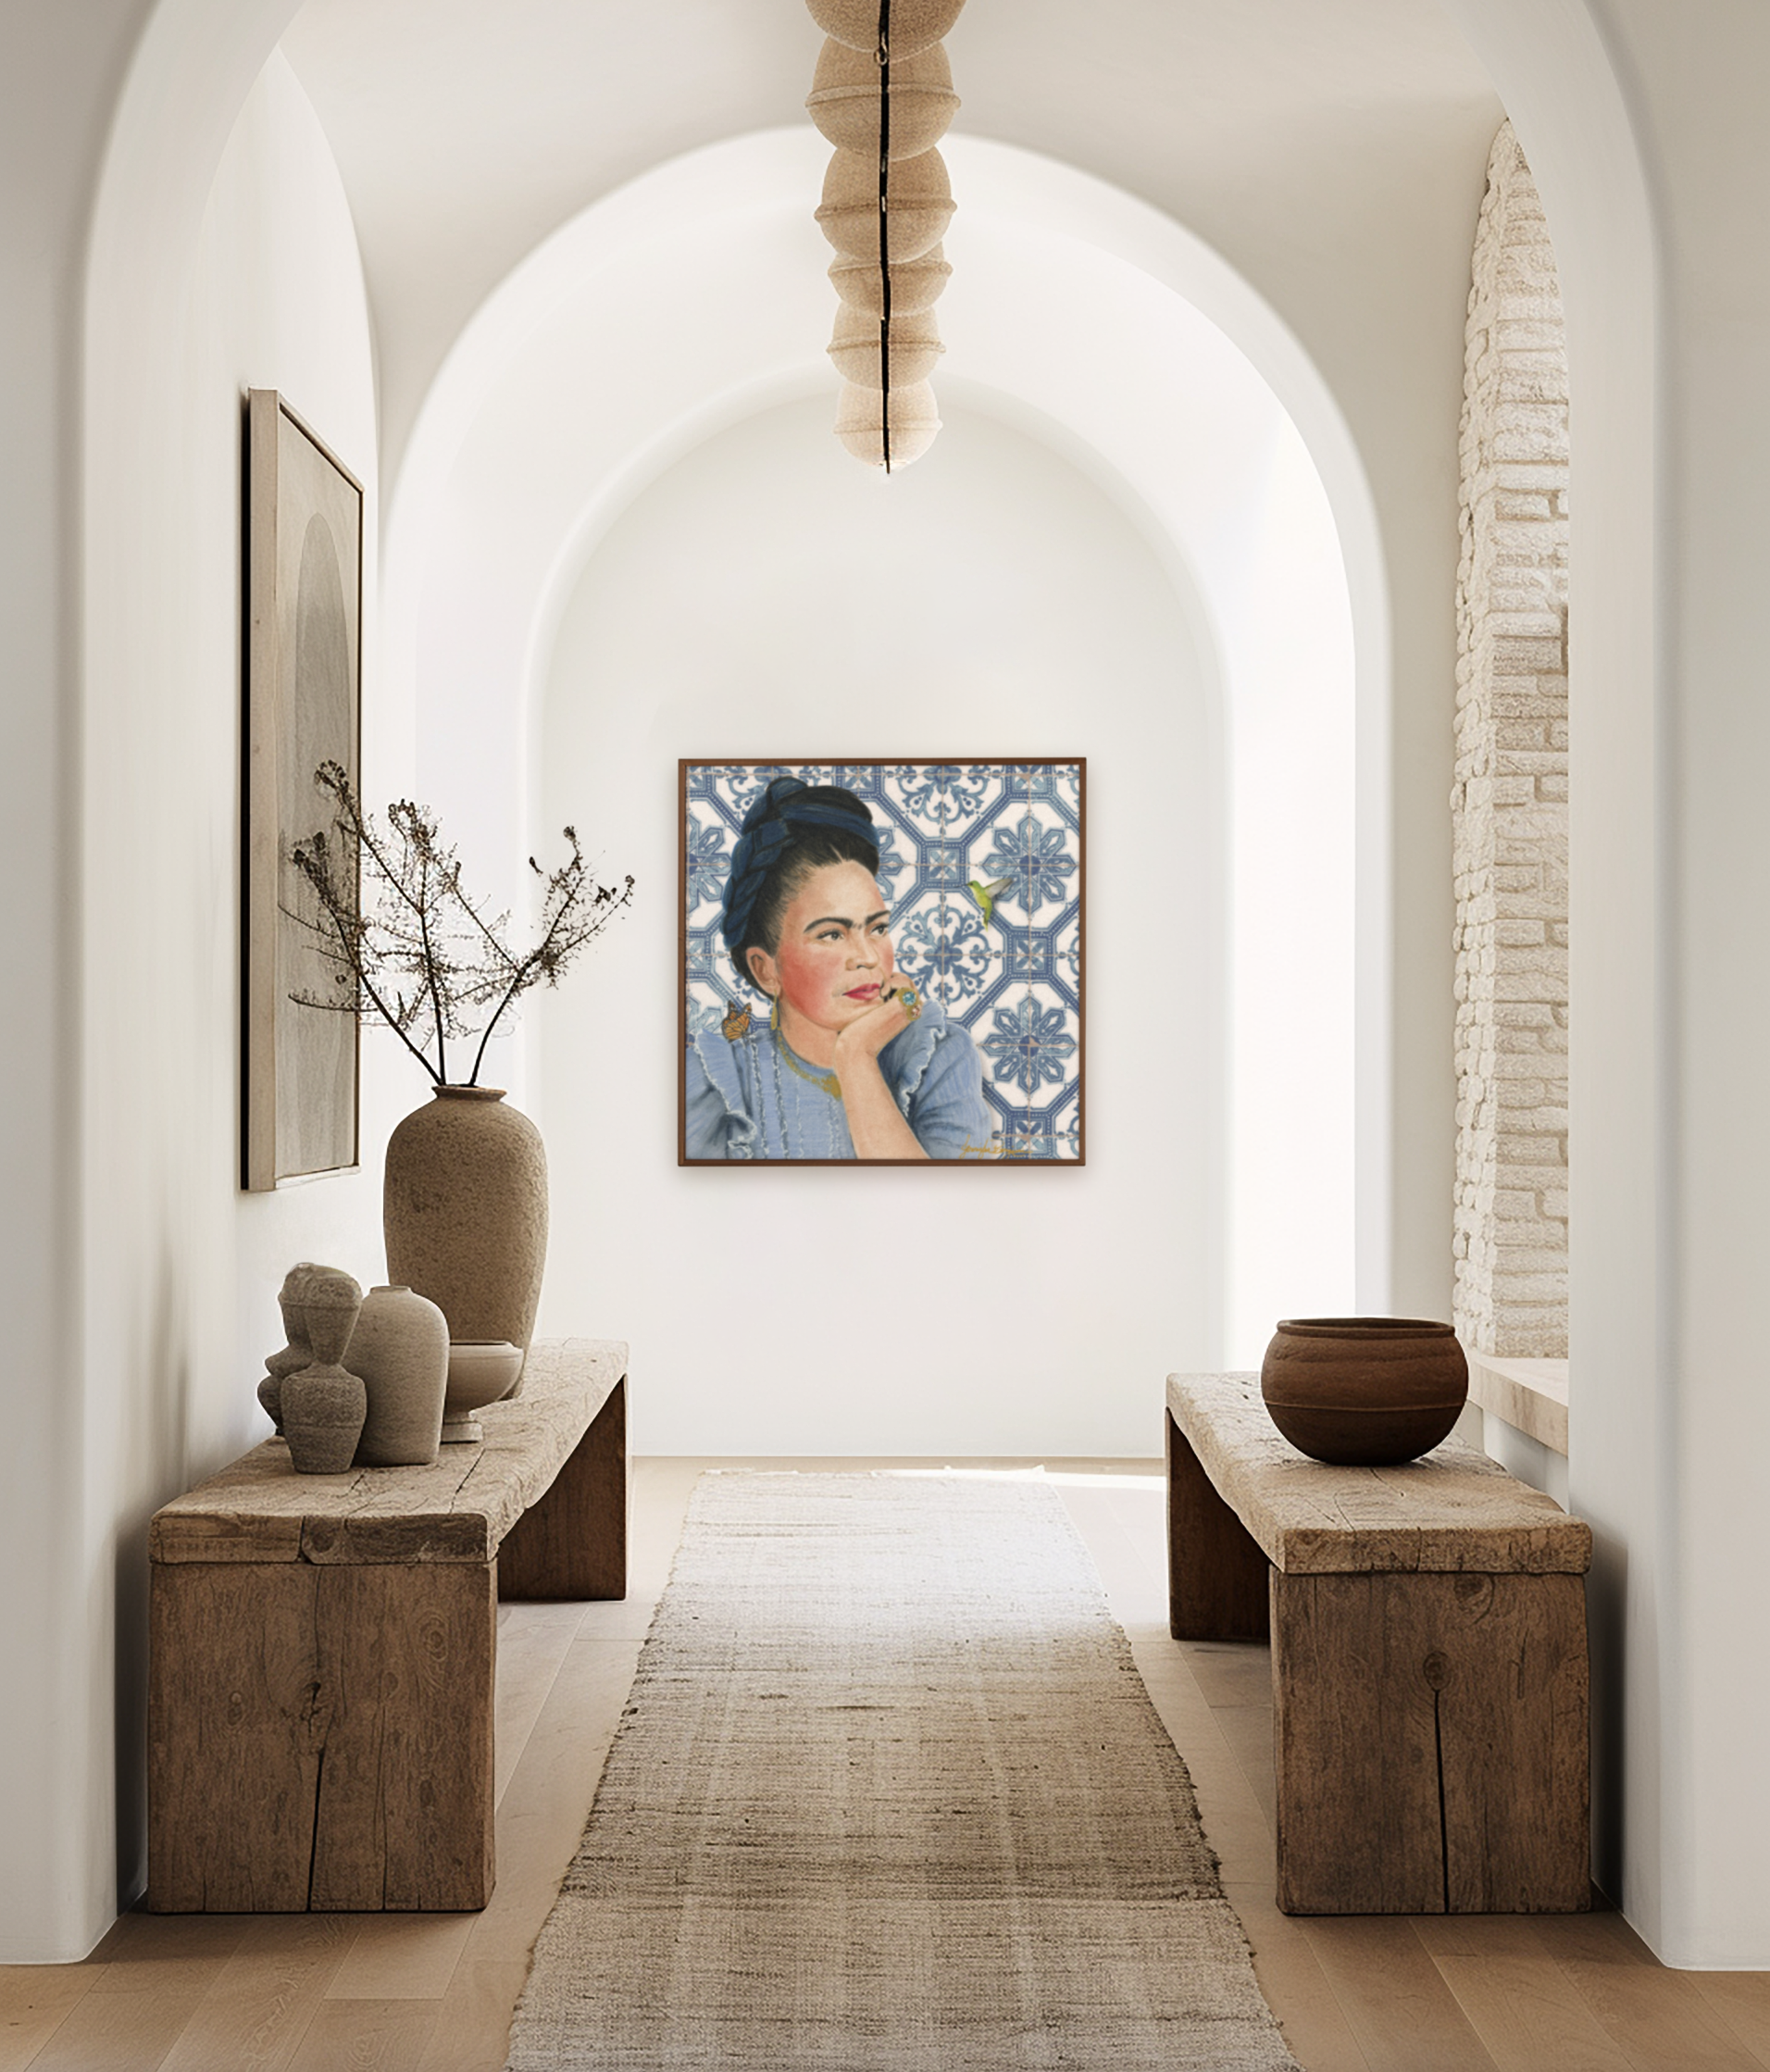 Jennifer Benjamin's portrait of Frida square canvas azulejo tiles, hallway home